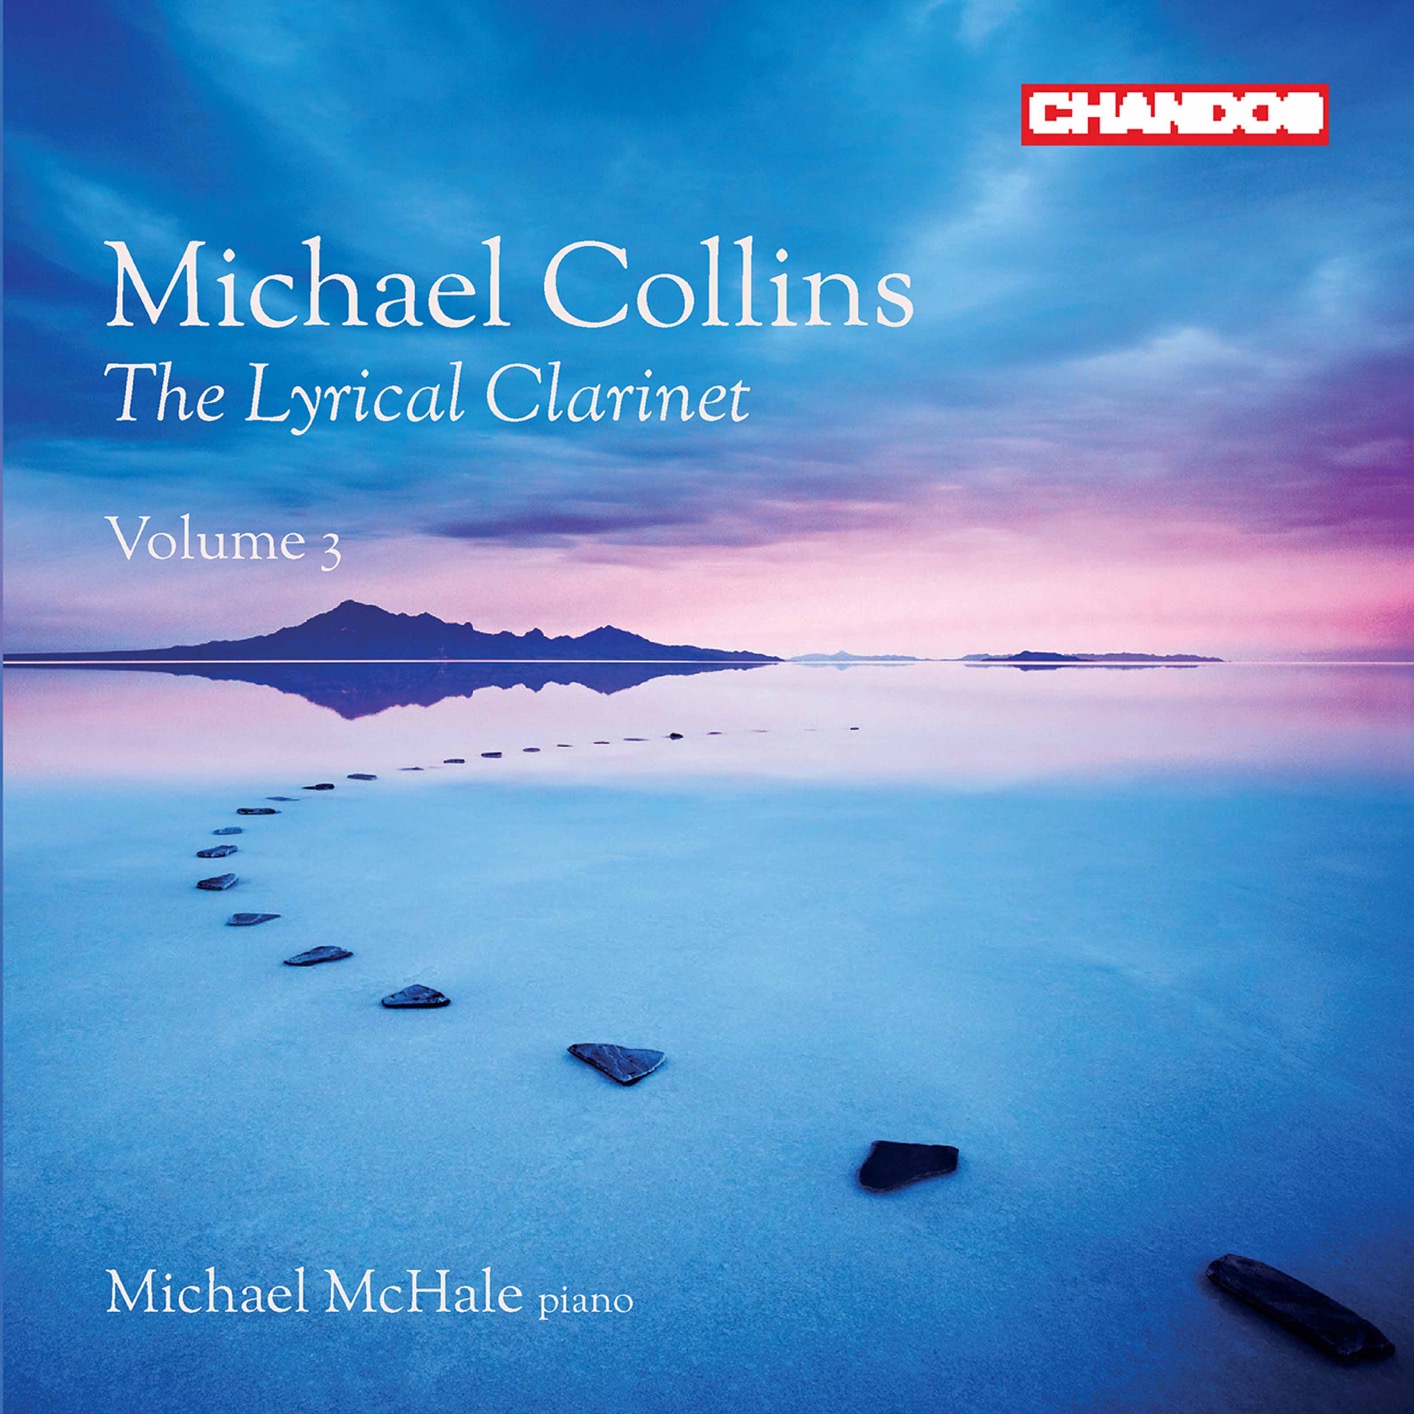 Michael Collins & Michael McHale - The Lyrical Clarinet, Vol. 3 (2020) [FLAC 24bit/96kHz]